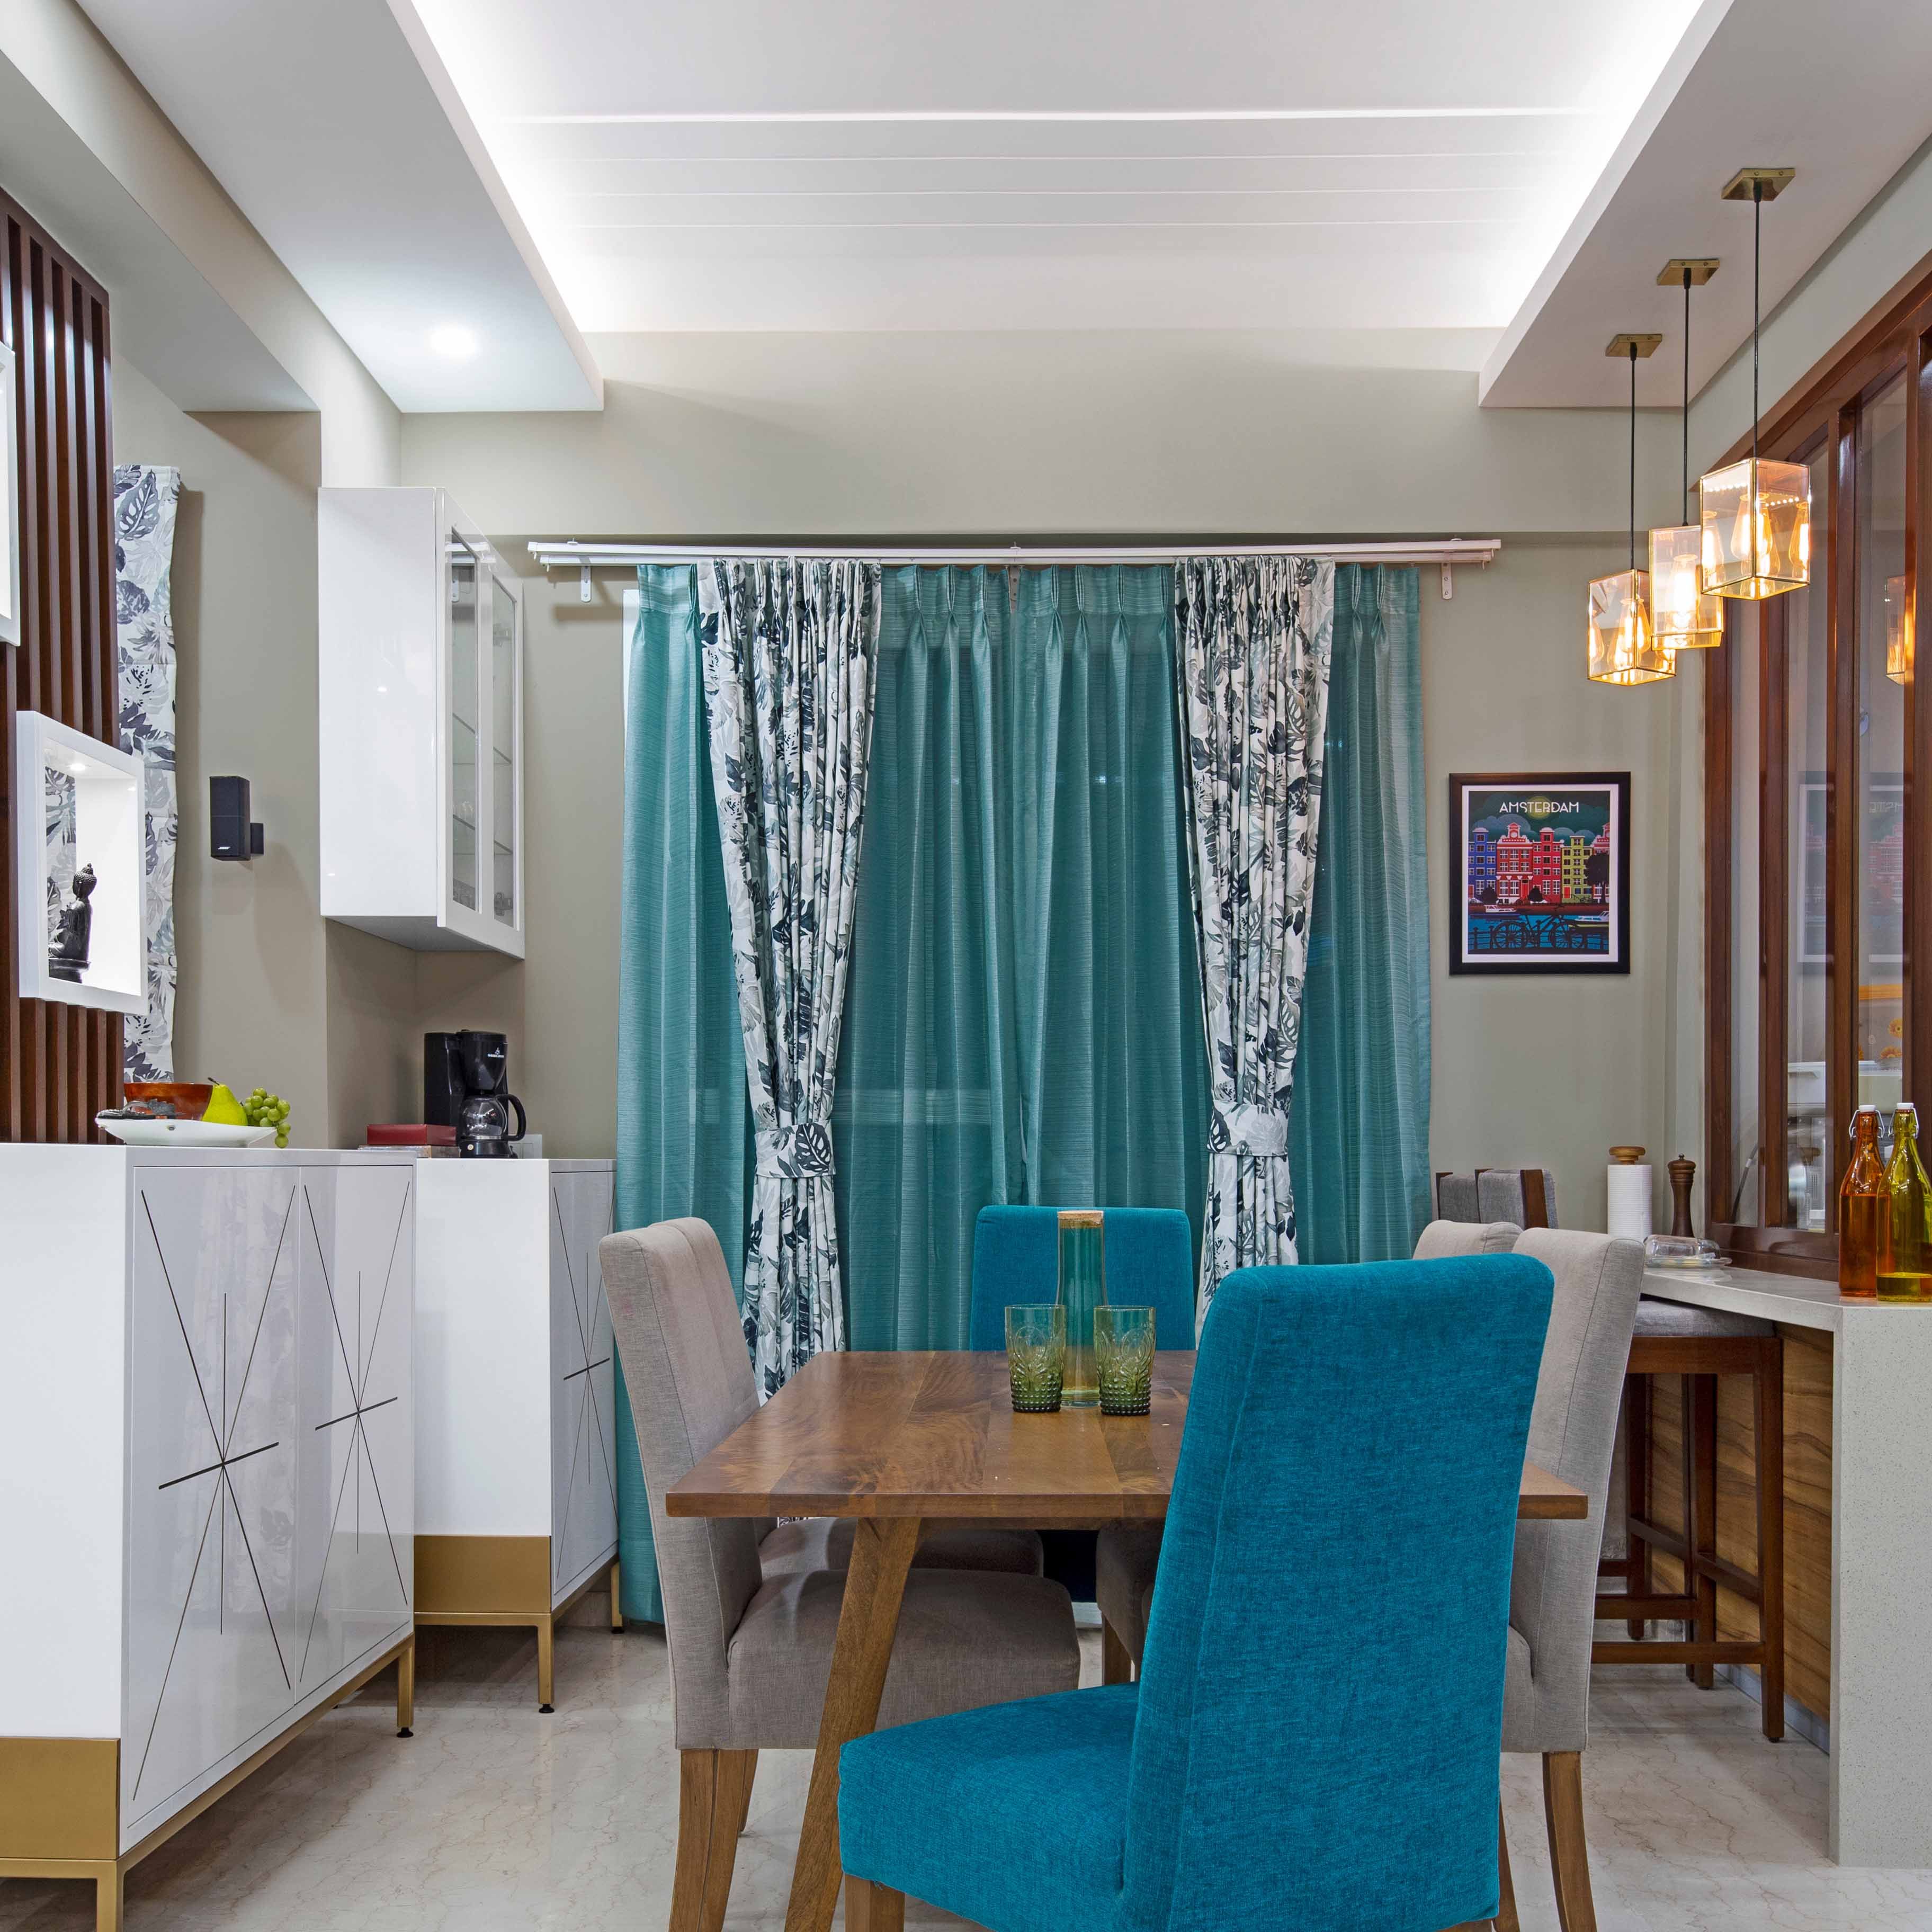 Modern Gypsum Parallel Ceiling Design For Dining Room